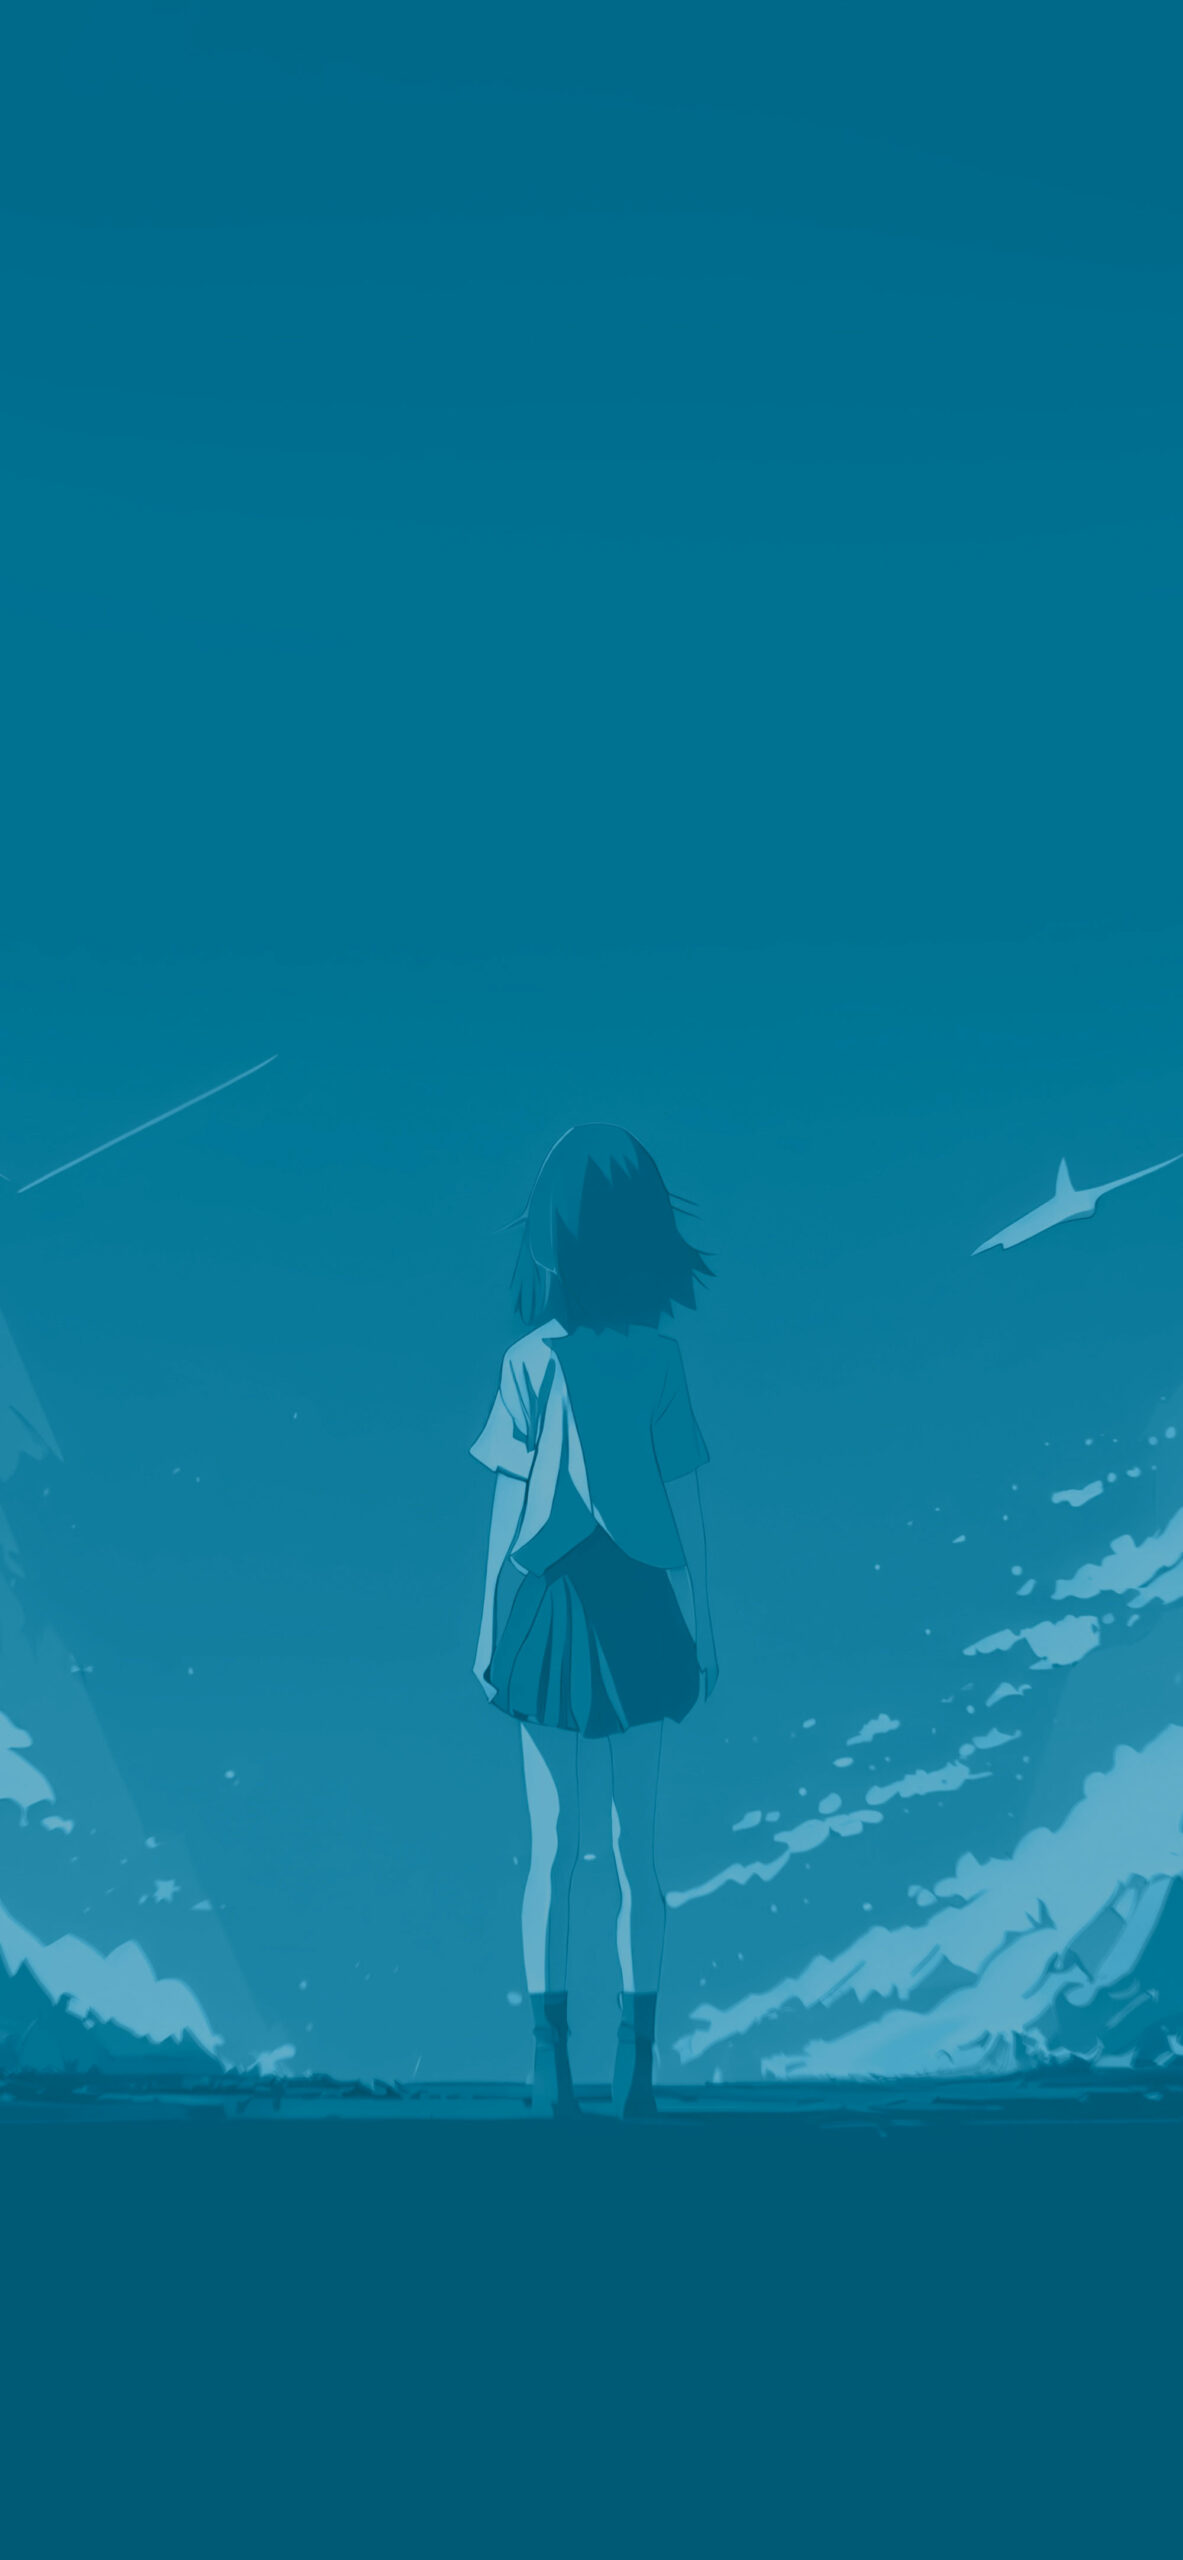 Girl and Sky Anime Aesthetic Wallpapers - Aesthetic Anime Walls